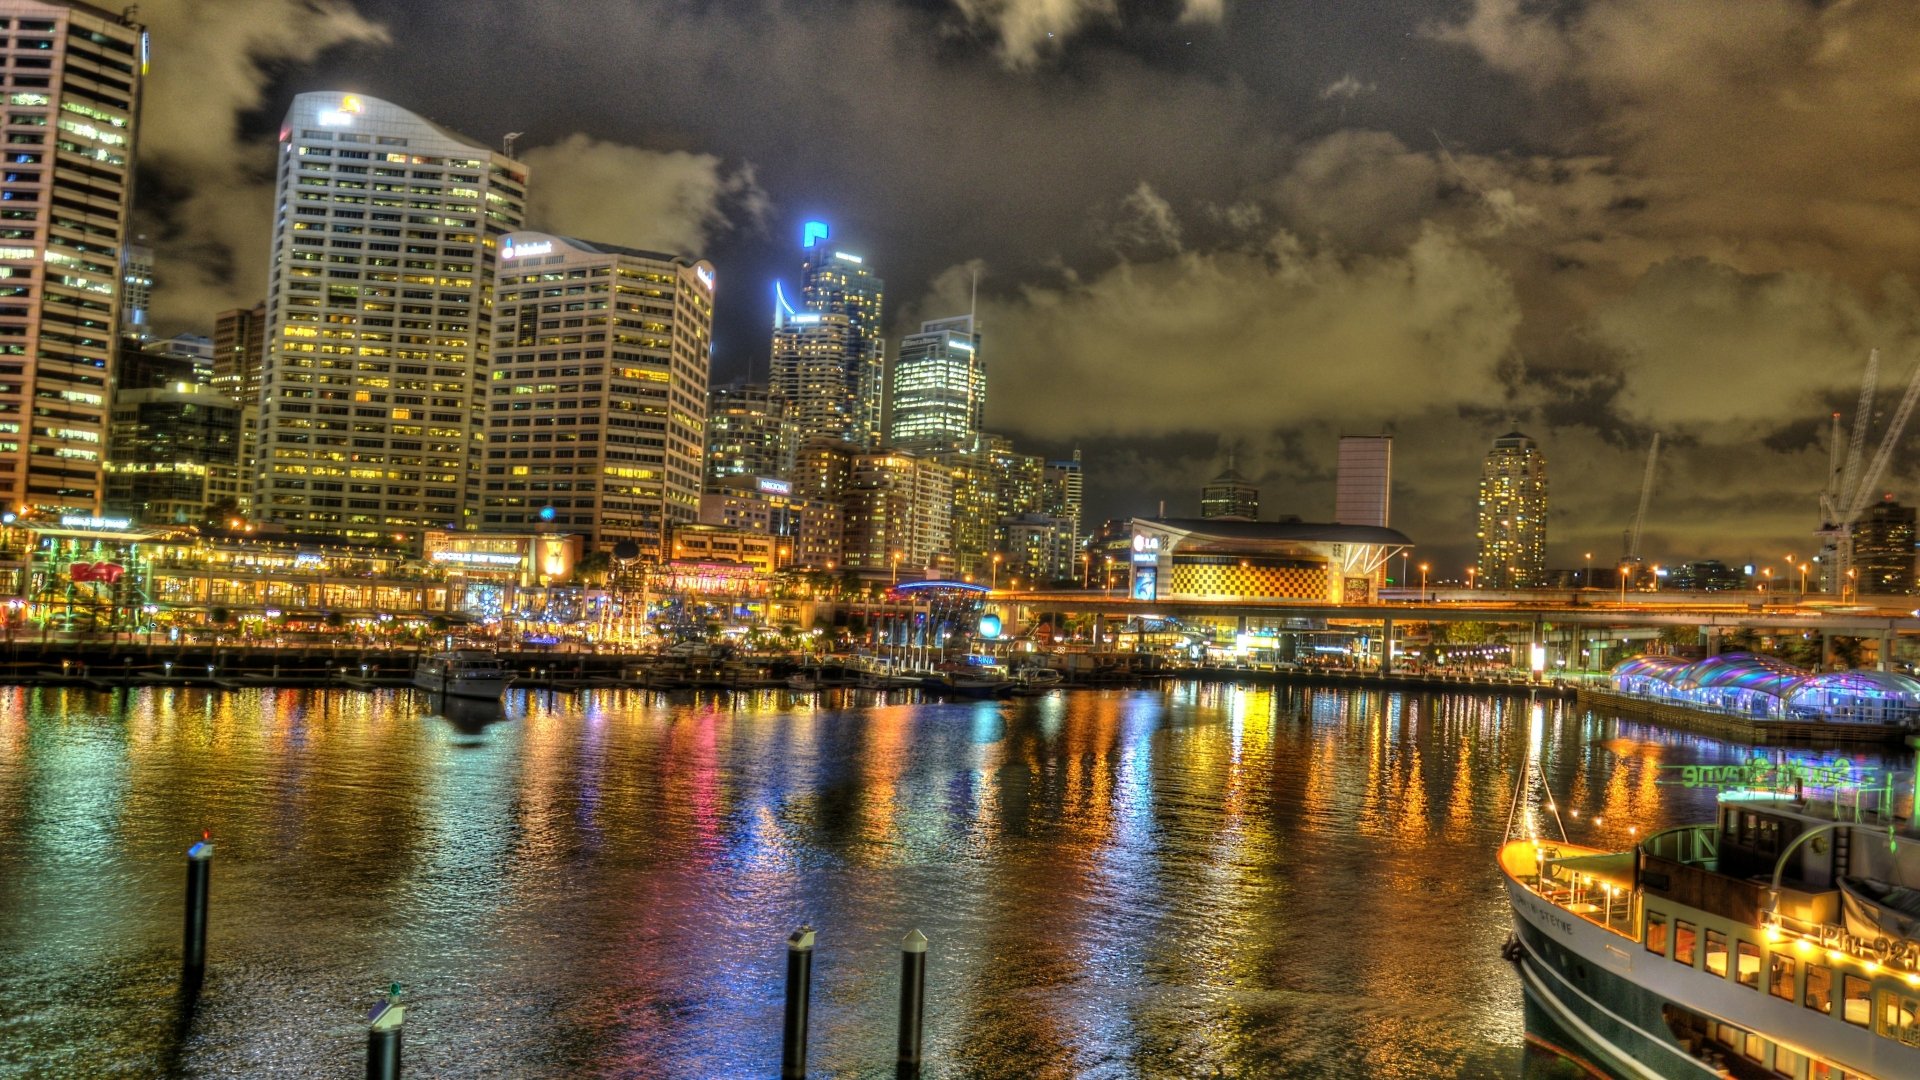 Darling Harbour 4k Ultra HD Wallpaper | Background Image | 3840x2160